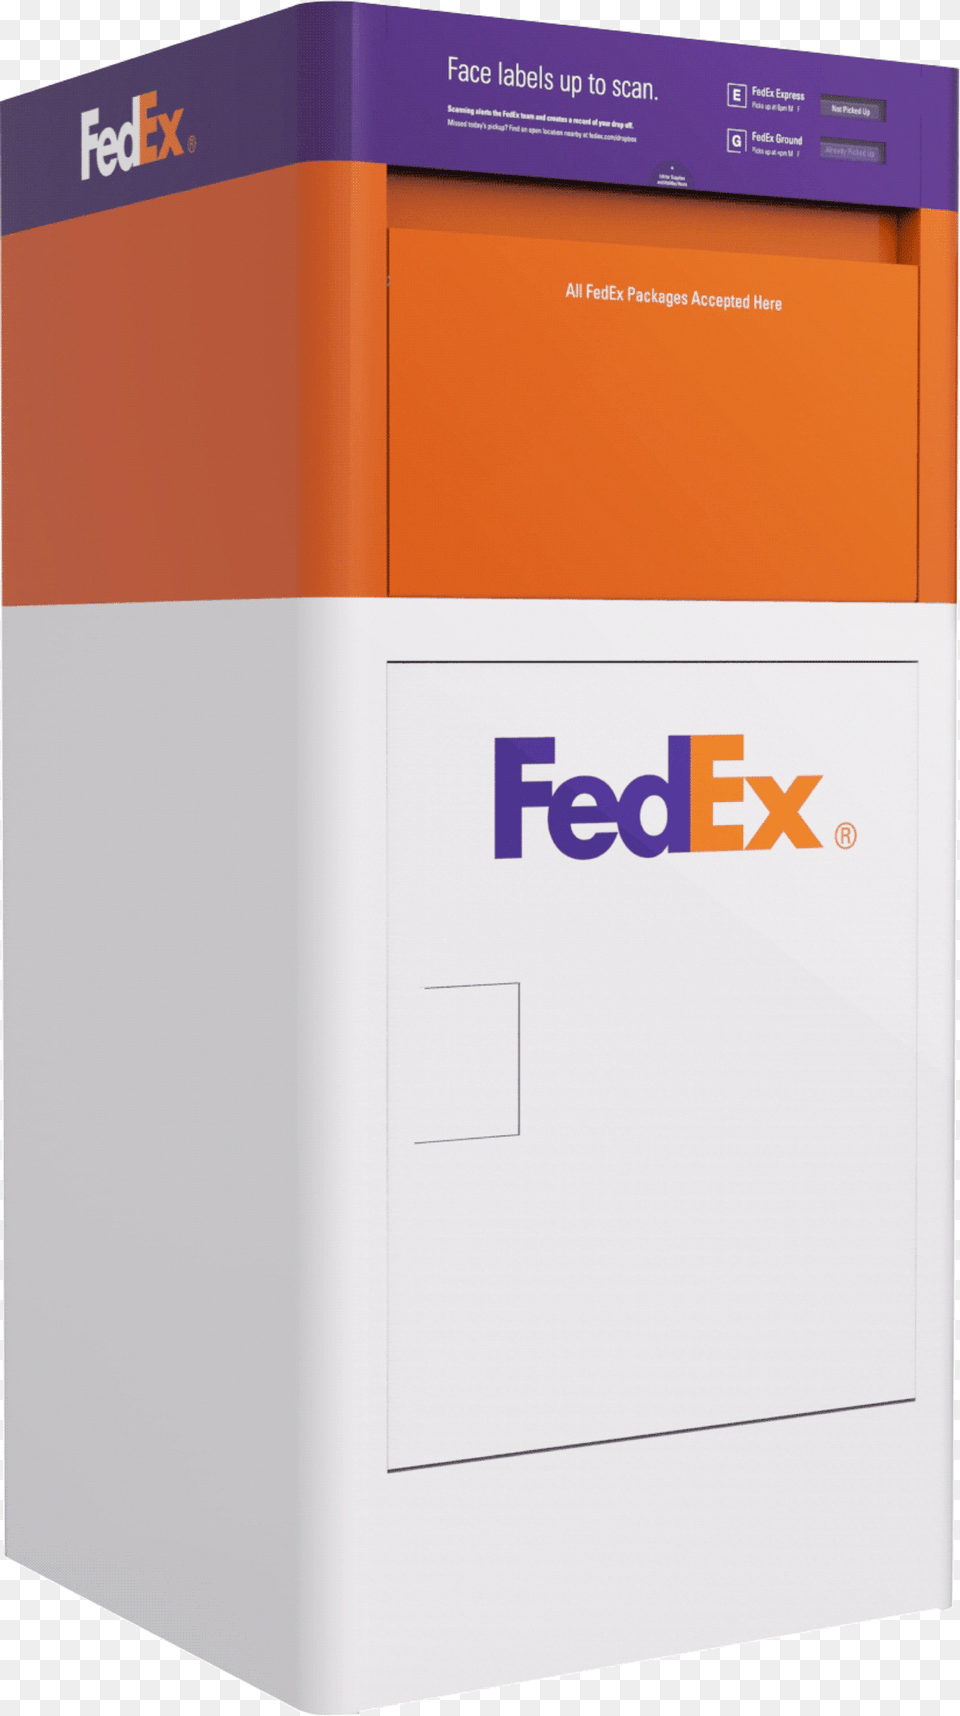 Fedex Boxes Dropbox Fedex, Mailbox, Computer Hardware, Electronics, Hardware Png Image